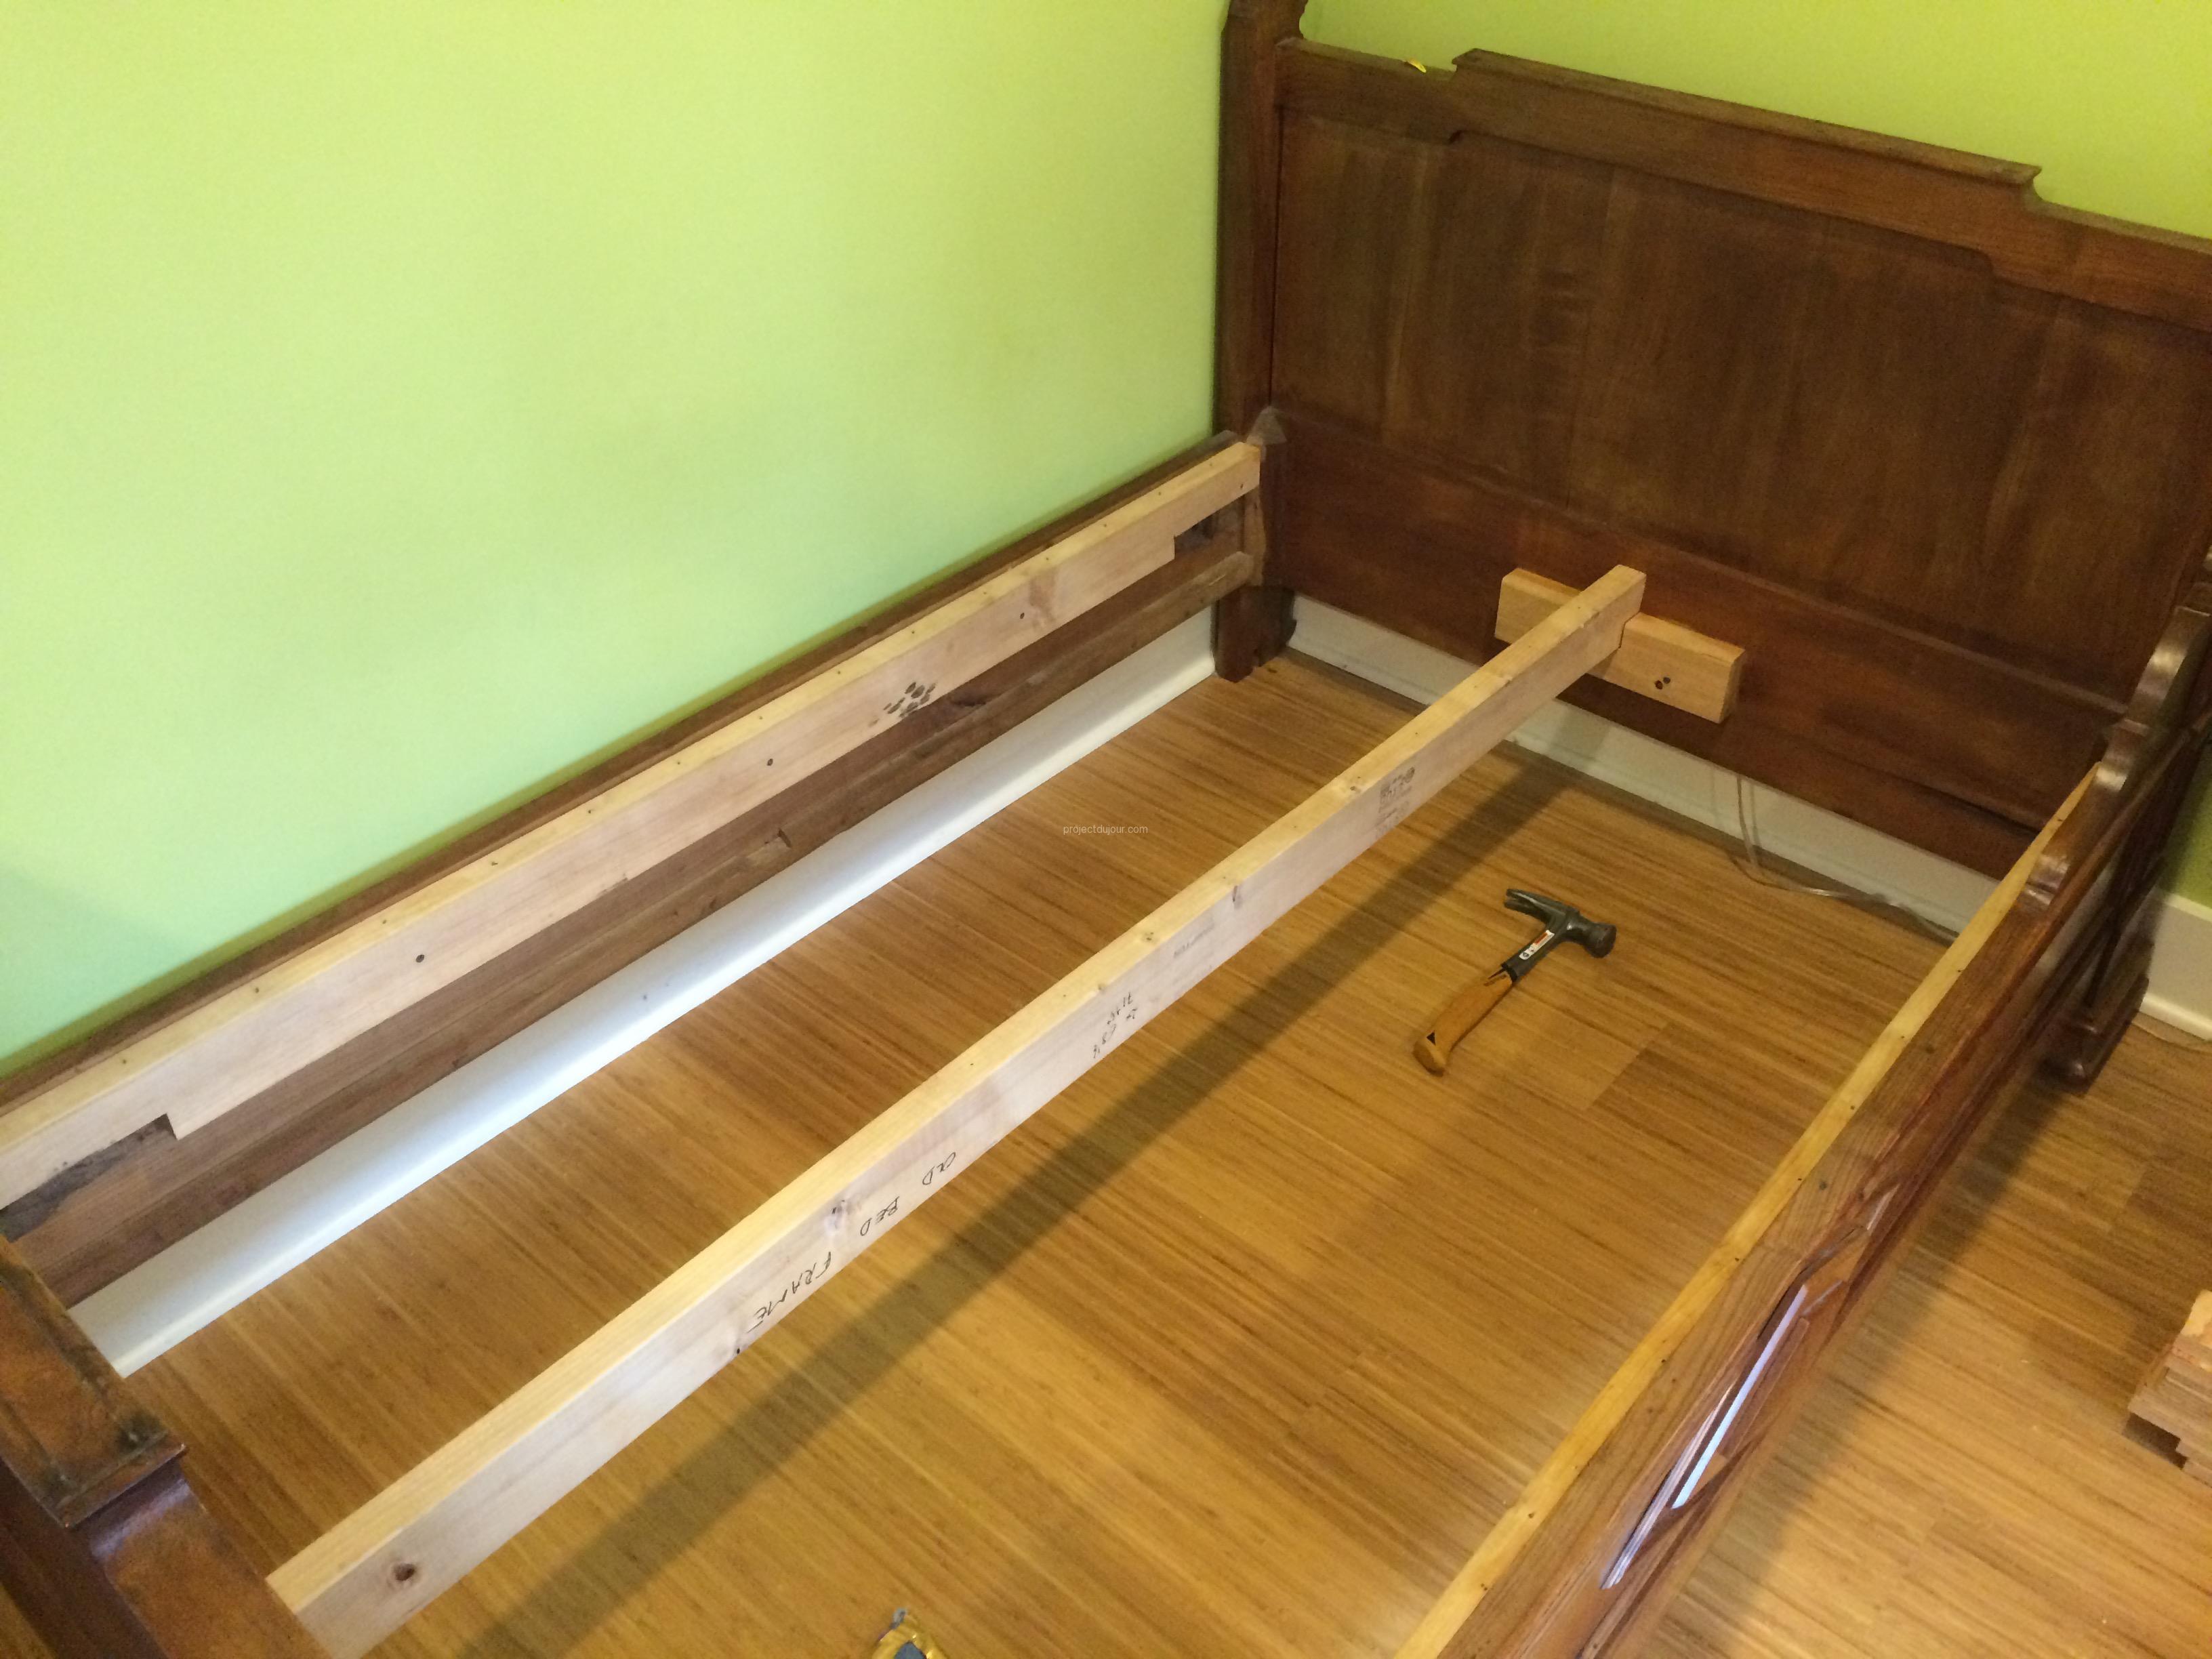 Ikea Custom Size Slatted Bed Base, Can You Use Ikea Slats Regular Bed Frame